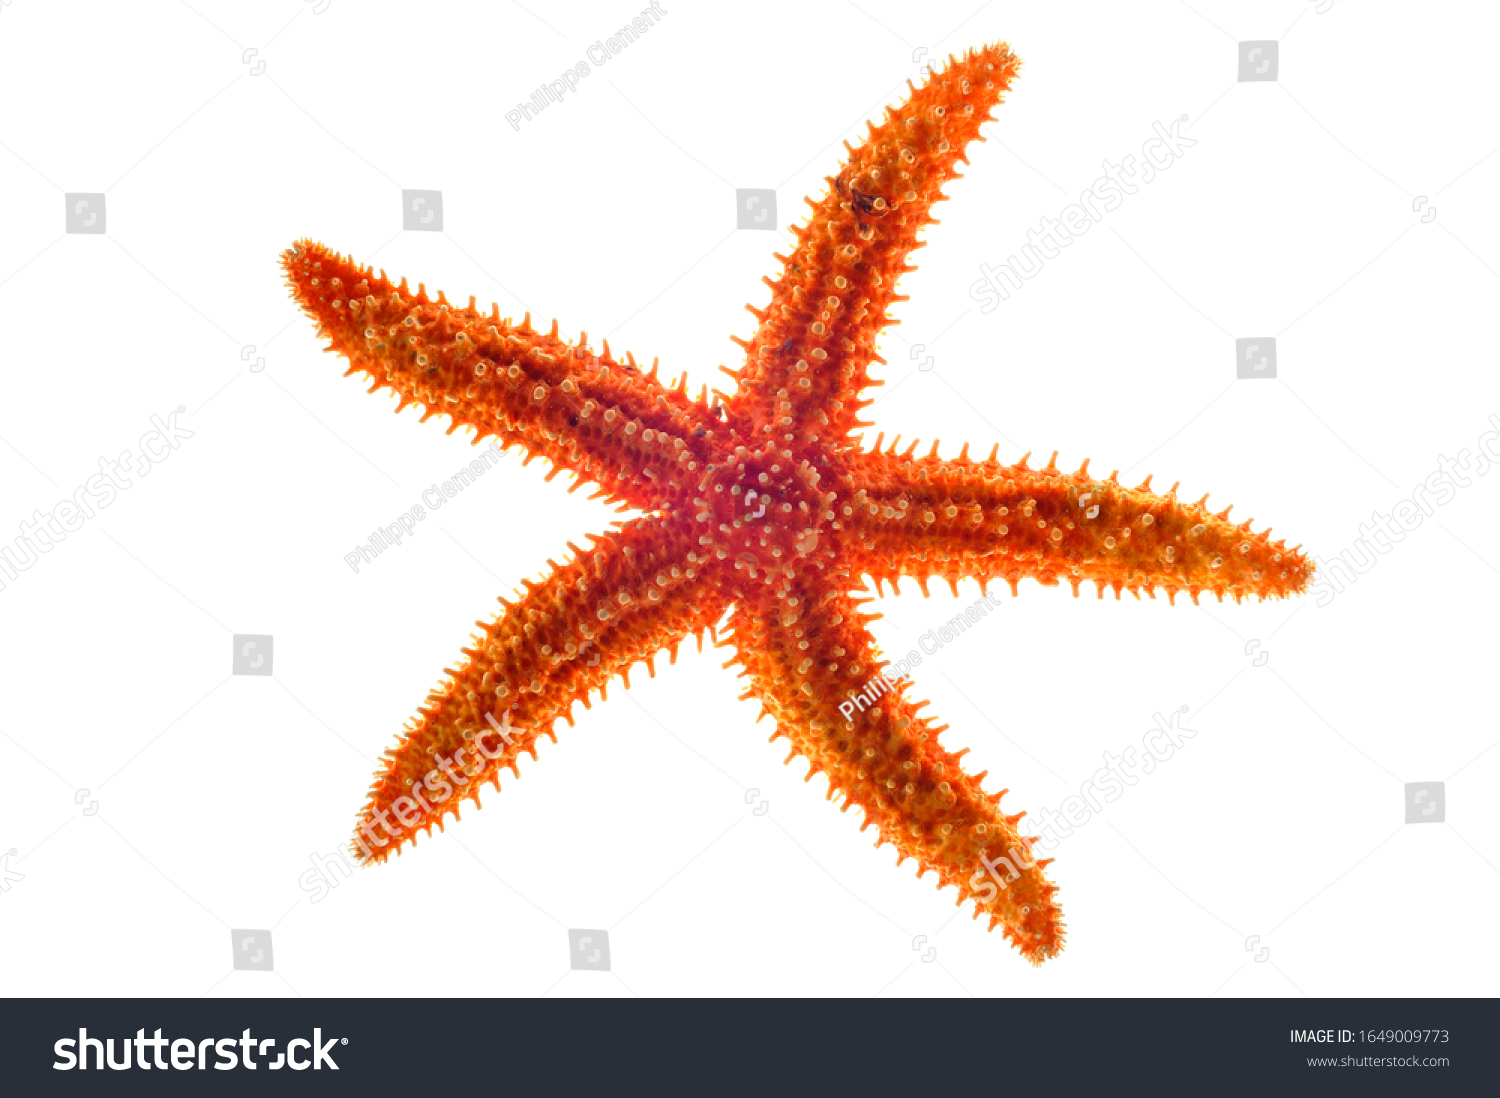 Dried common starfish / sea star (Asterias rubens) on white background #1649009773